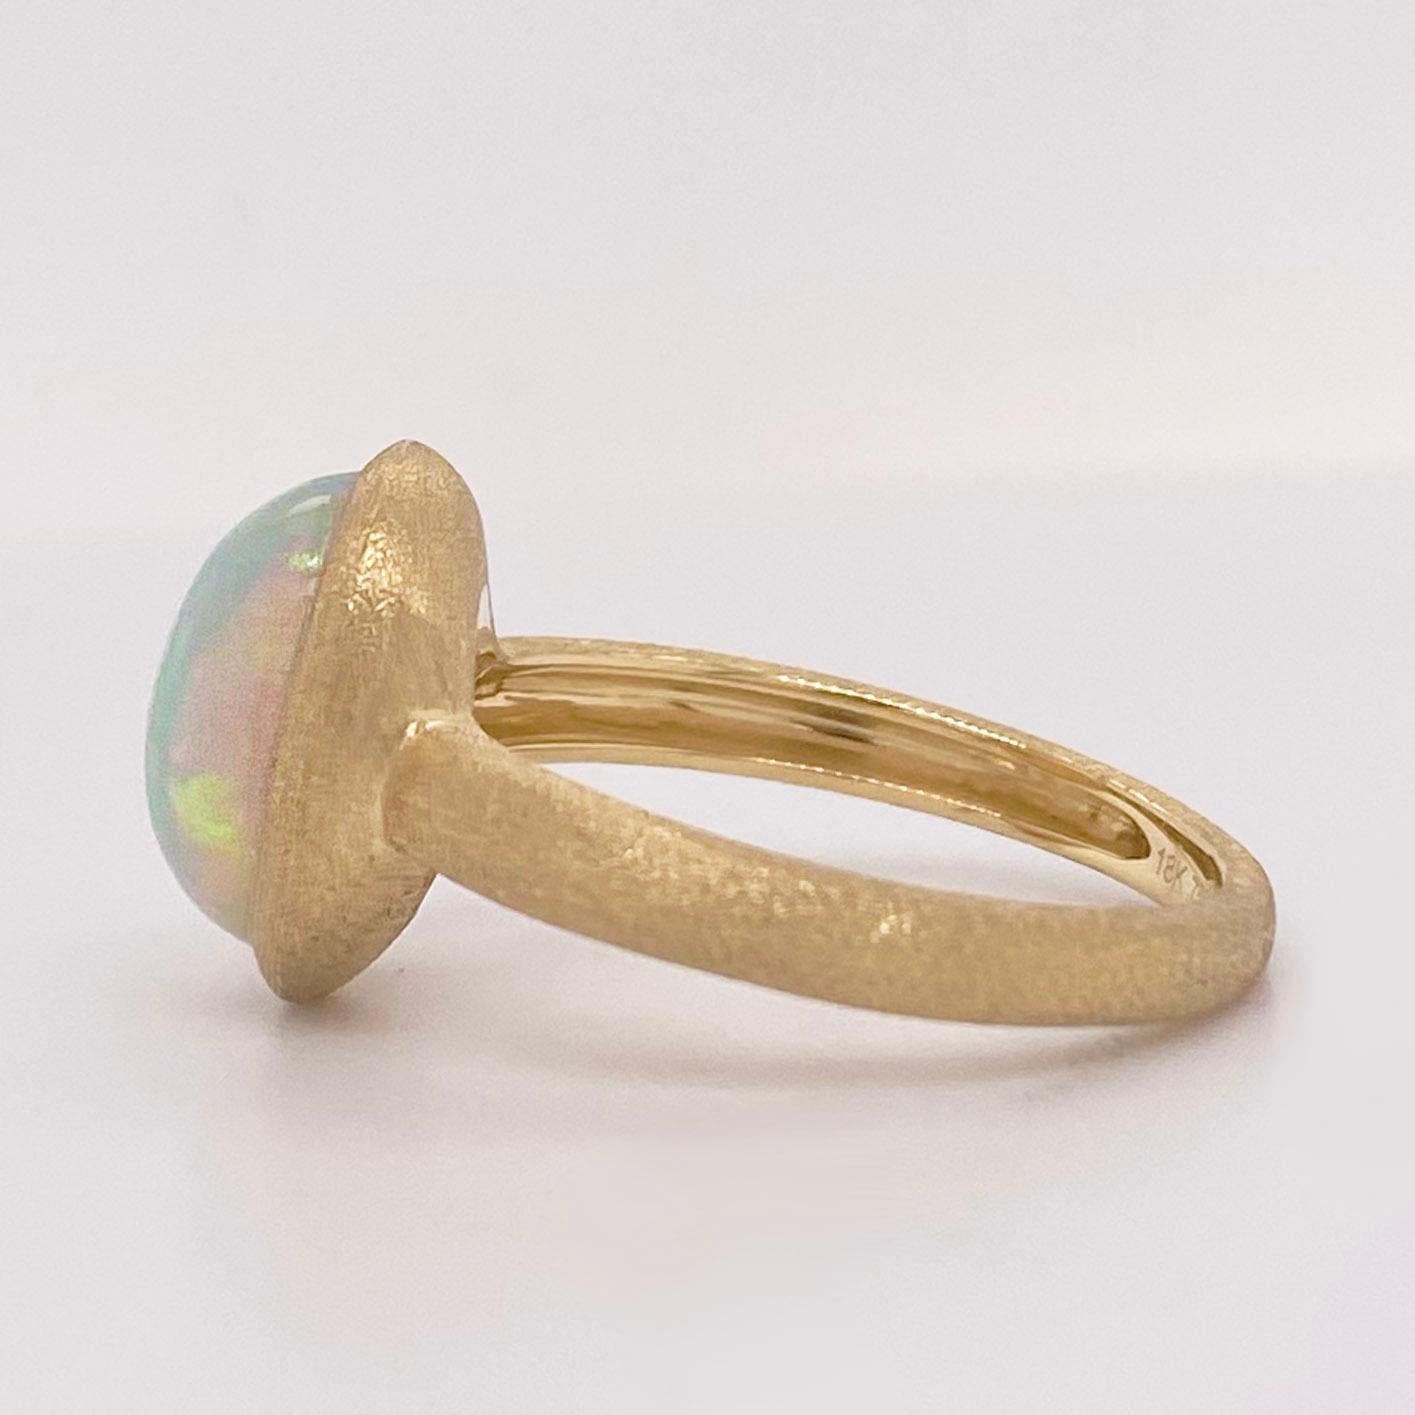 For Sale:  Australian Opal Ring, 2.29ct Opal Brush Finish in 18k Yellow Gold, Bezel Set 2